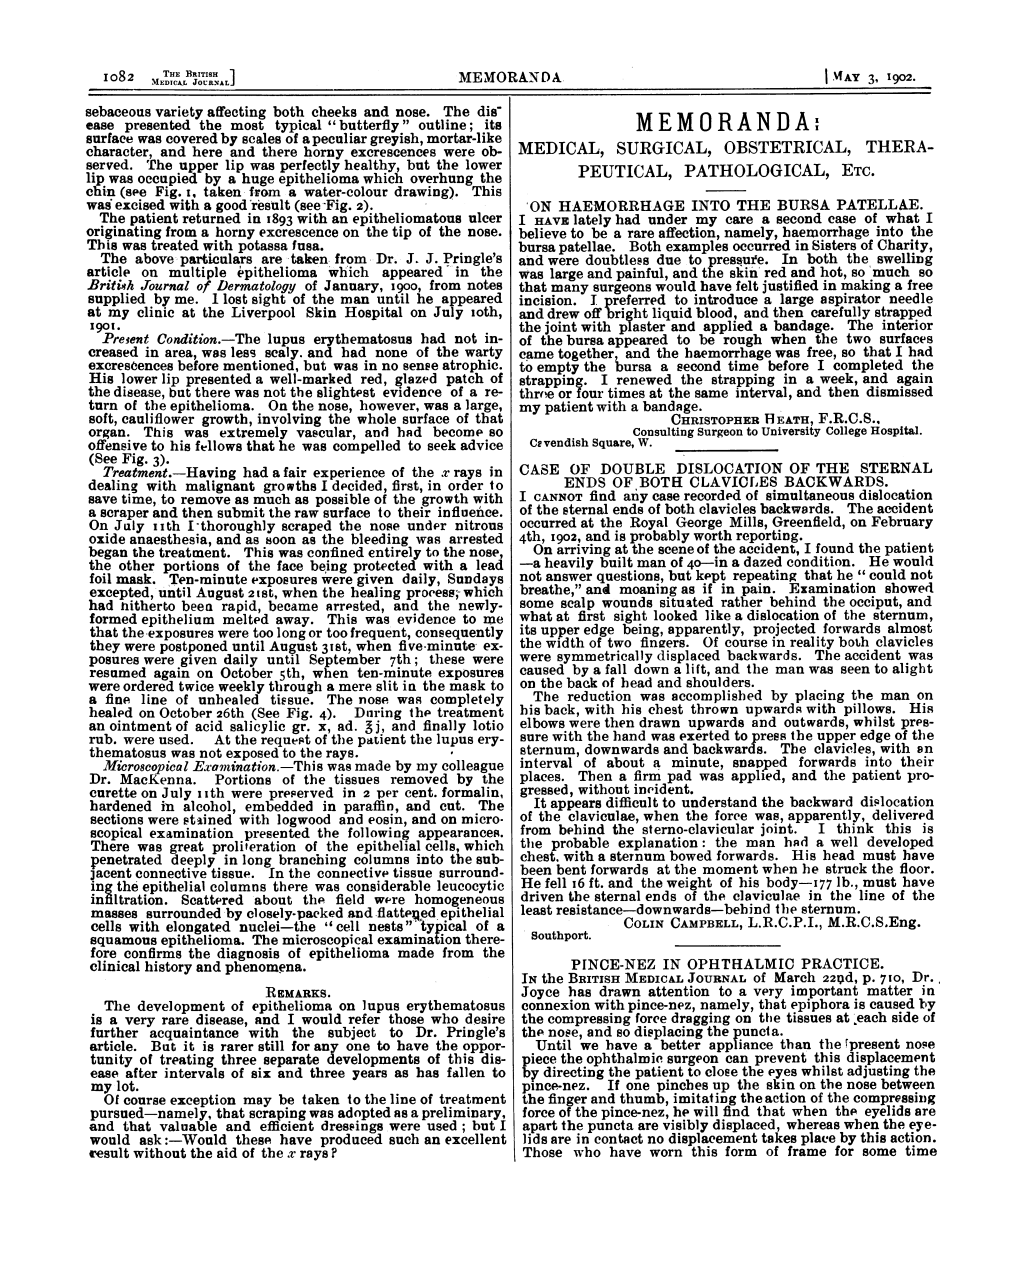 Io82 M.E'dica JOURNAL] Memorandka |MWAY 3, 1902